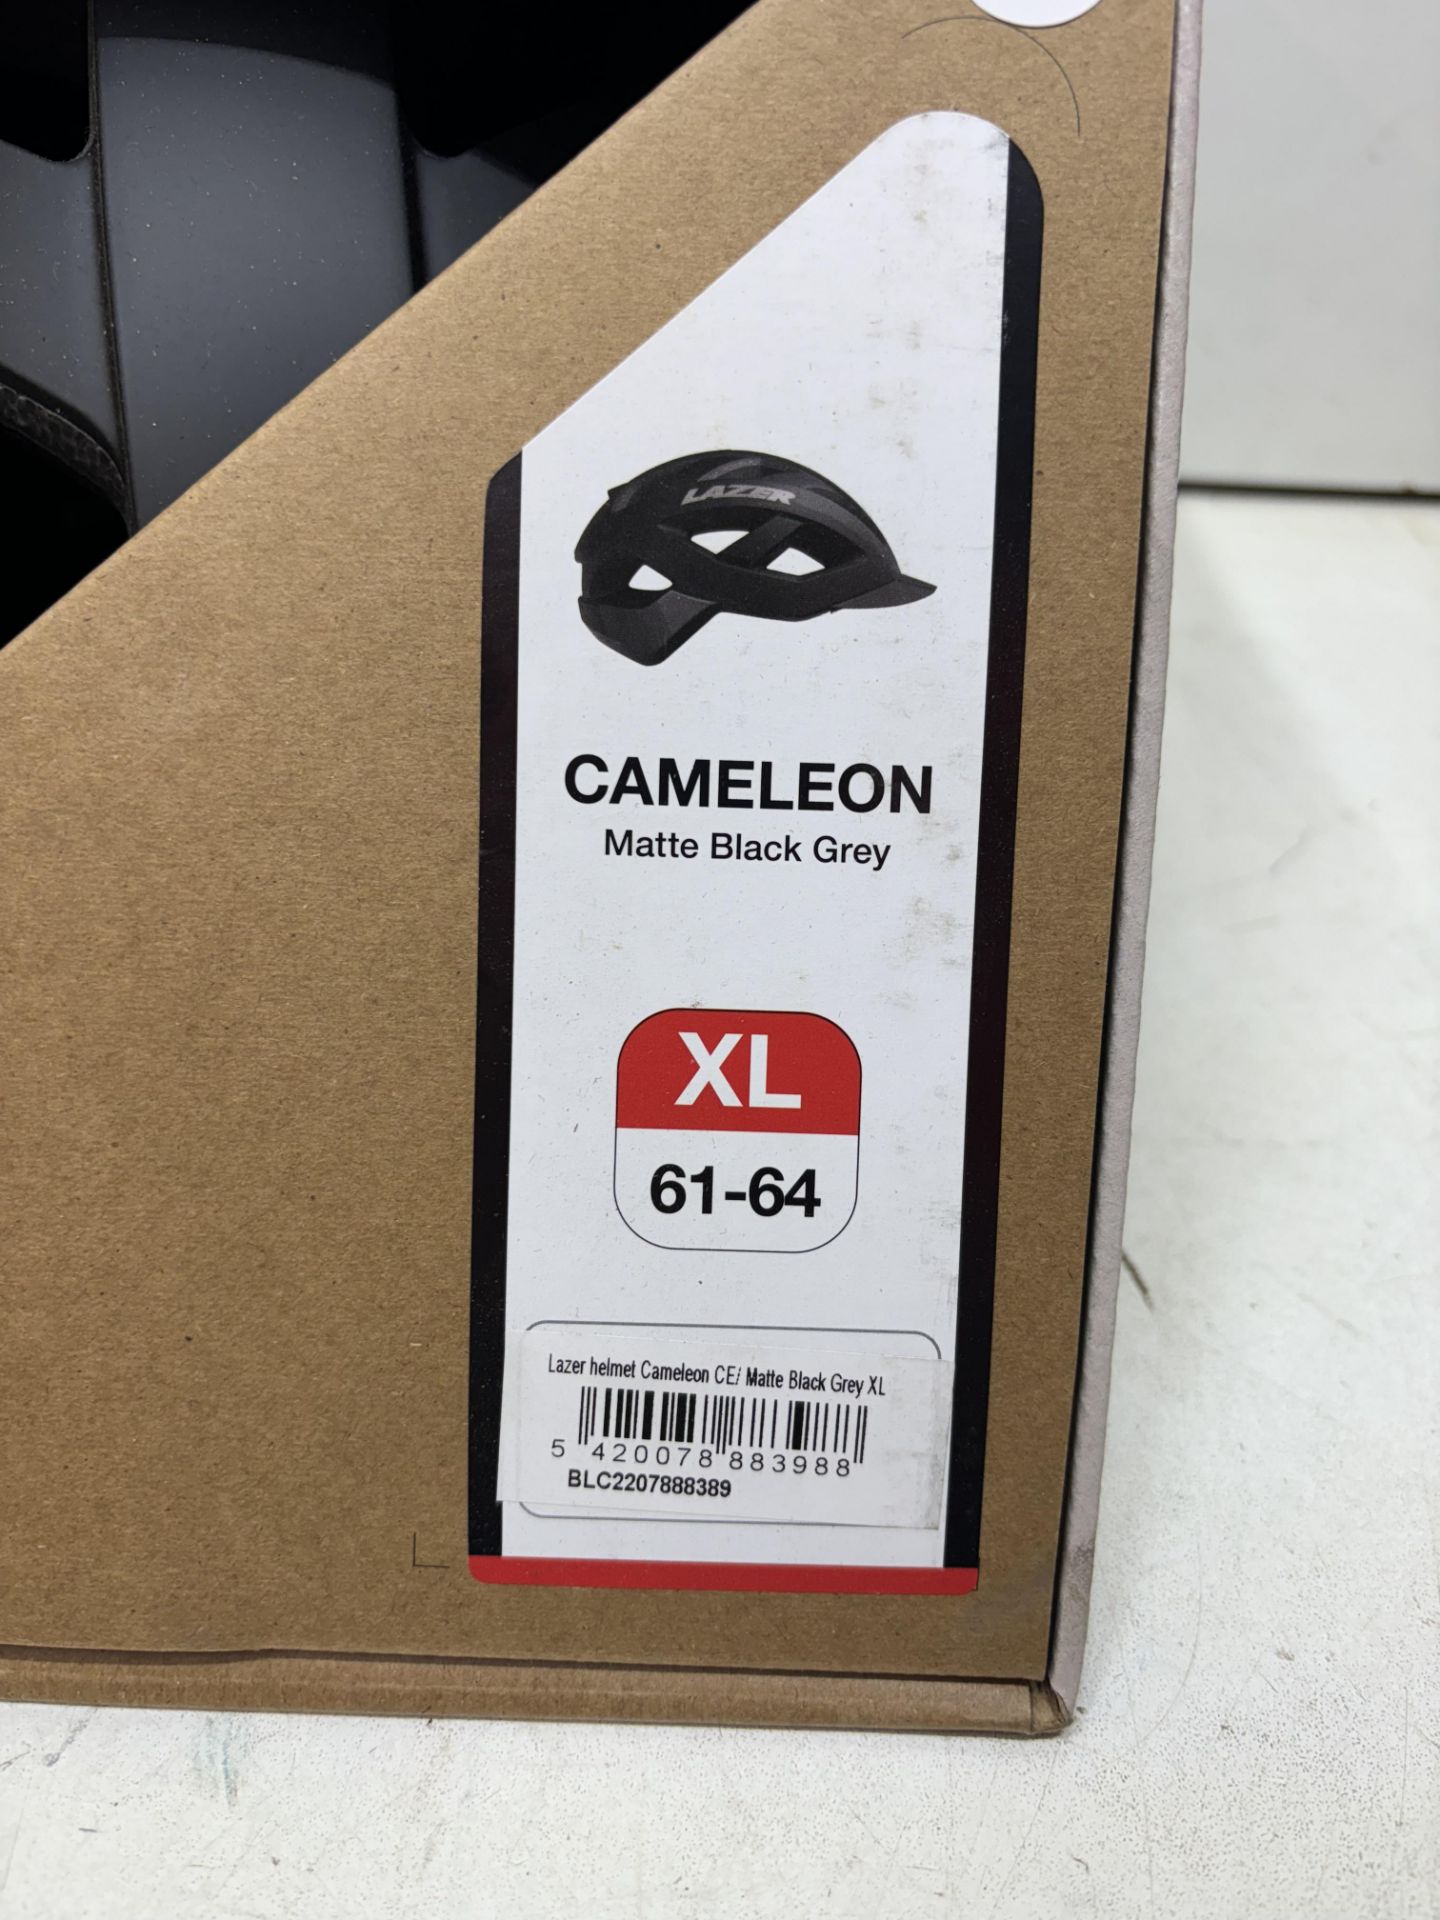 LAZER Cameleon Helmet, Size XL (61-64cm) - Matte Black/Grey - Image 3 of 3